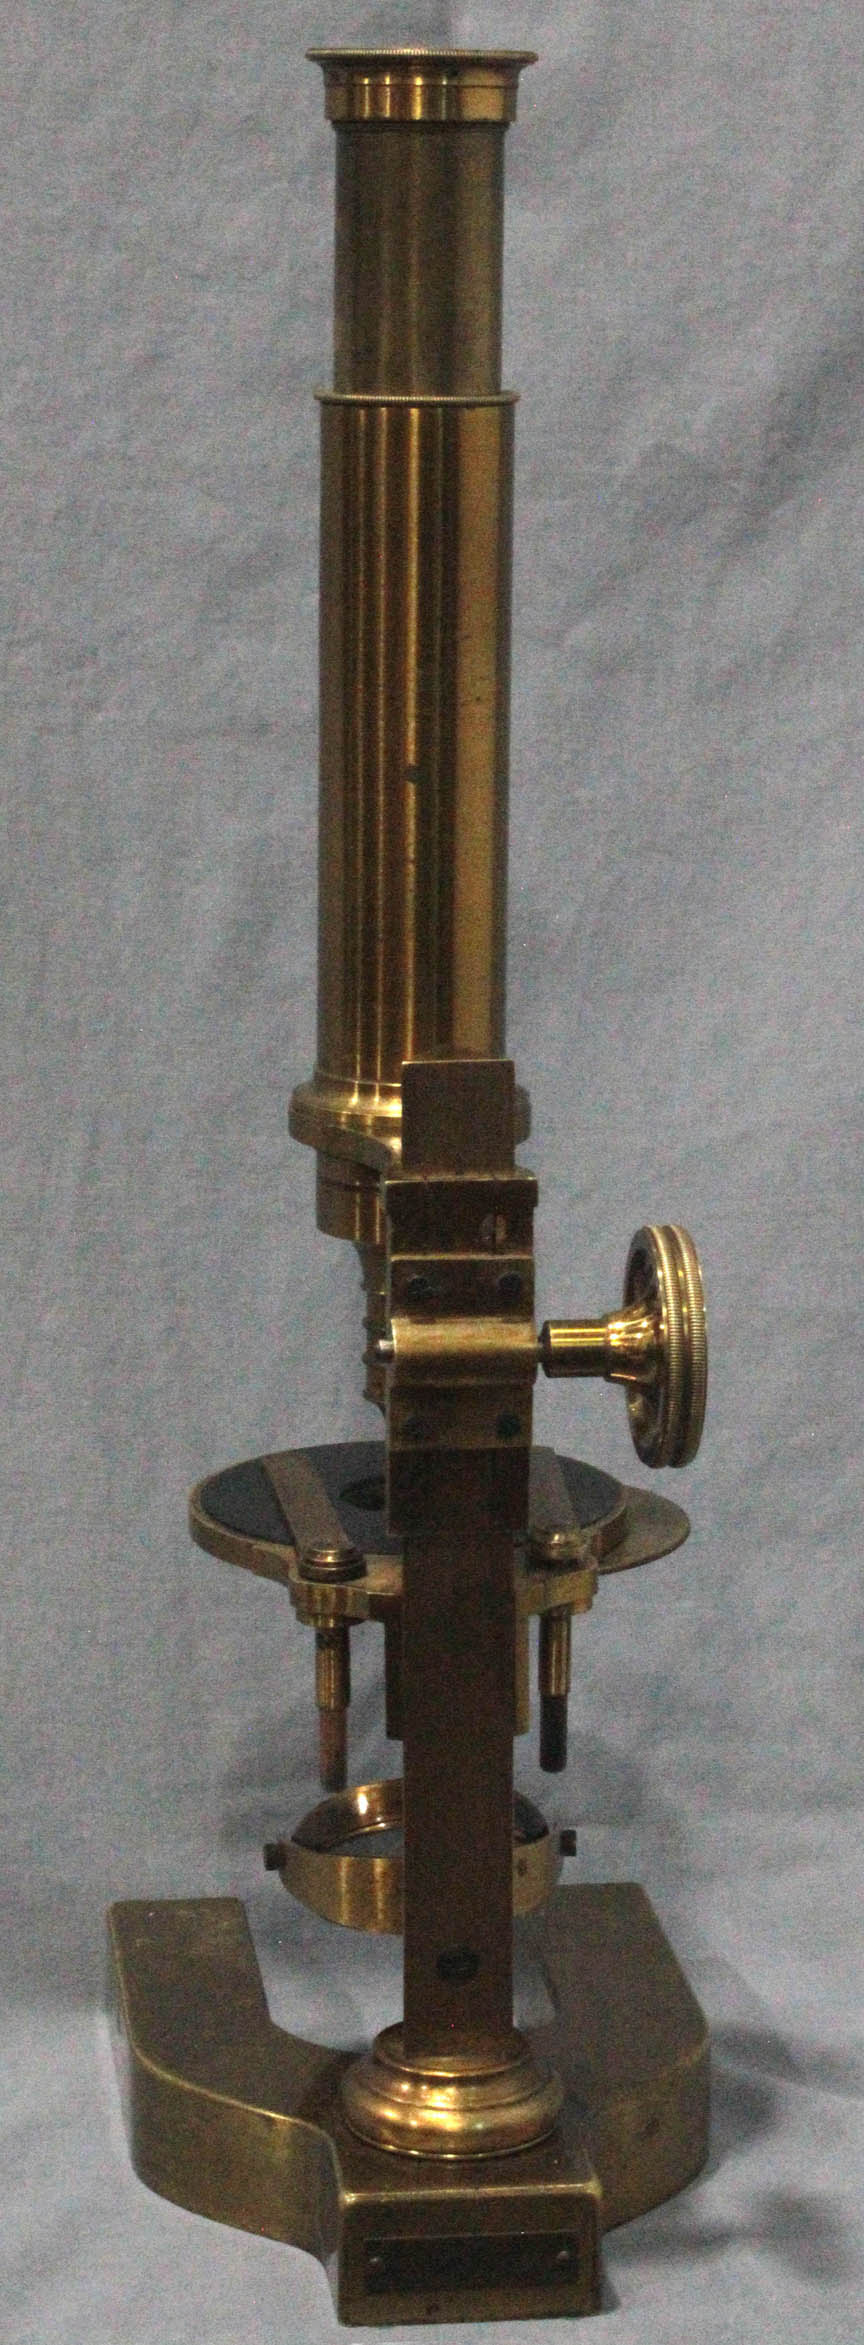 plossl microscope